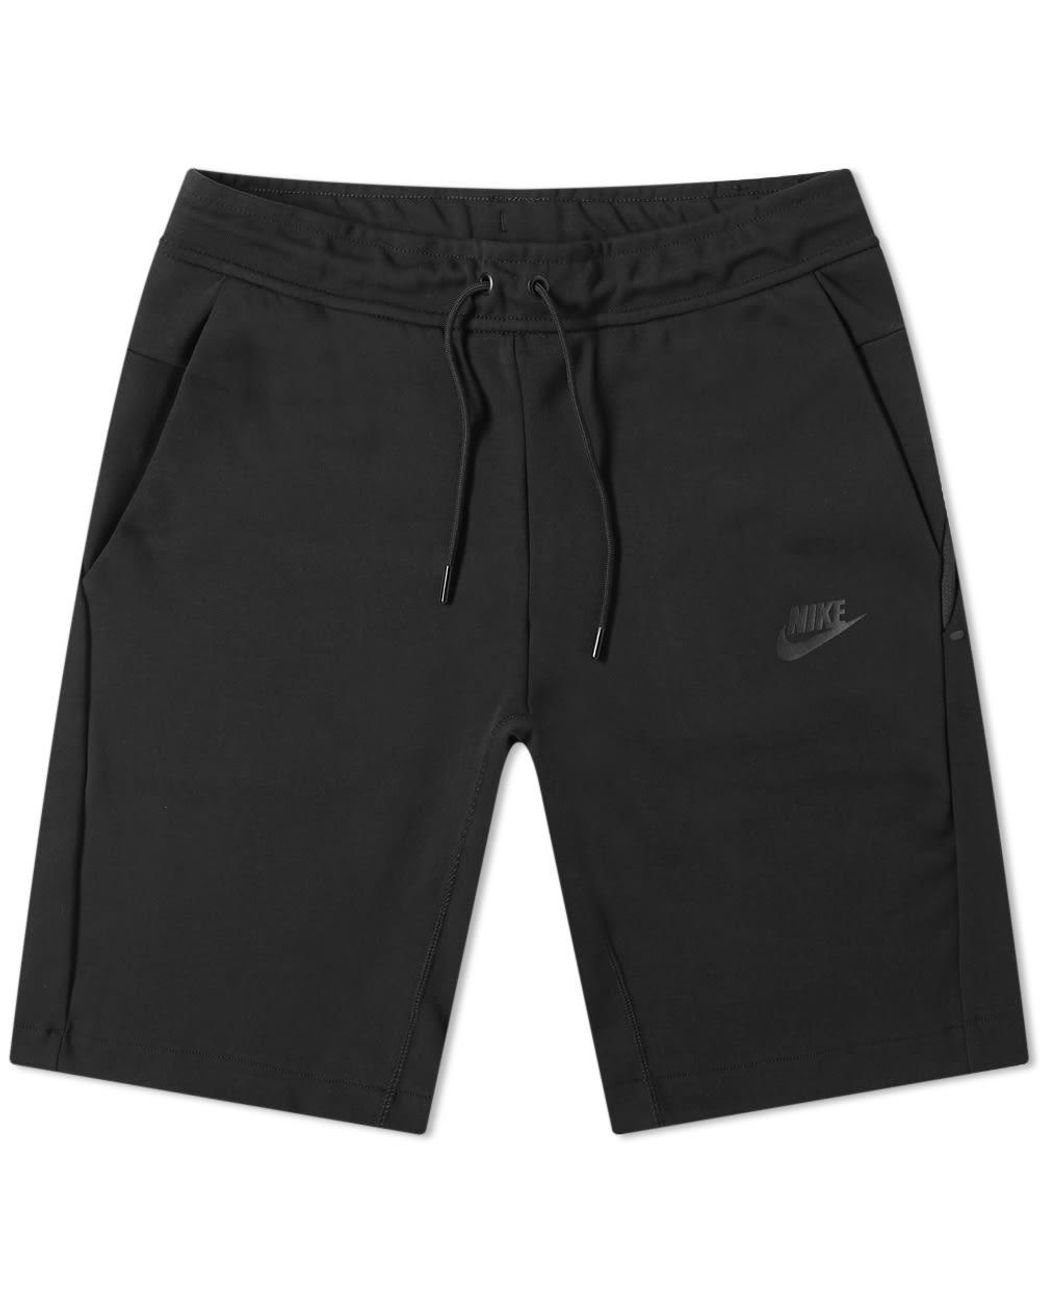 Nike Tech Fleece Short in Black for Men - Save 13% - Lyst